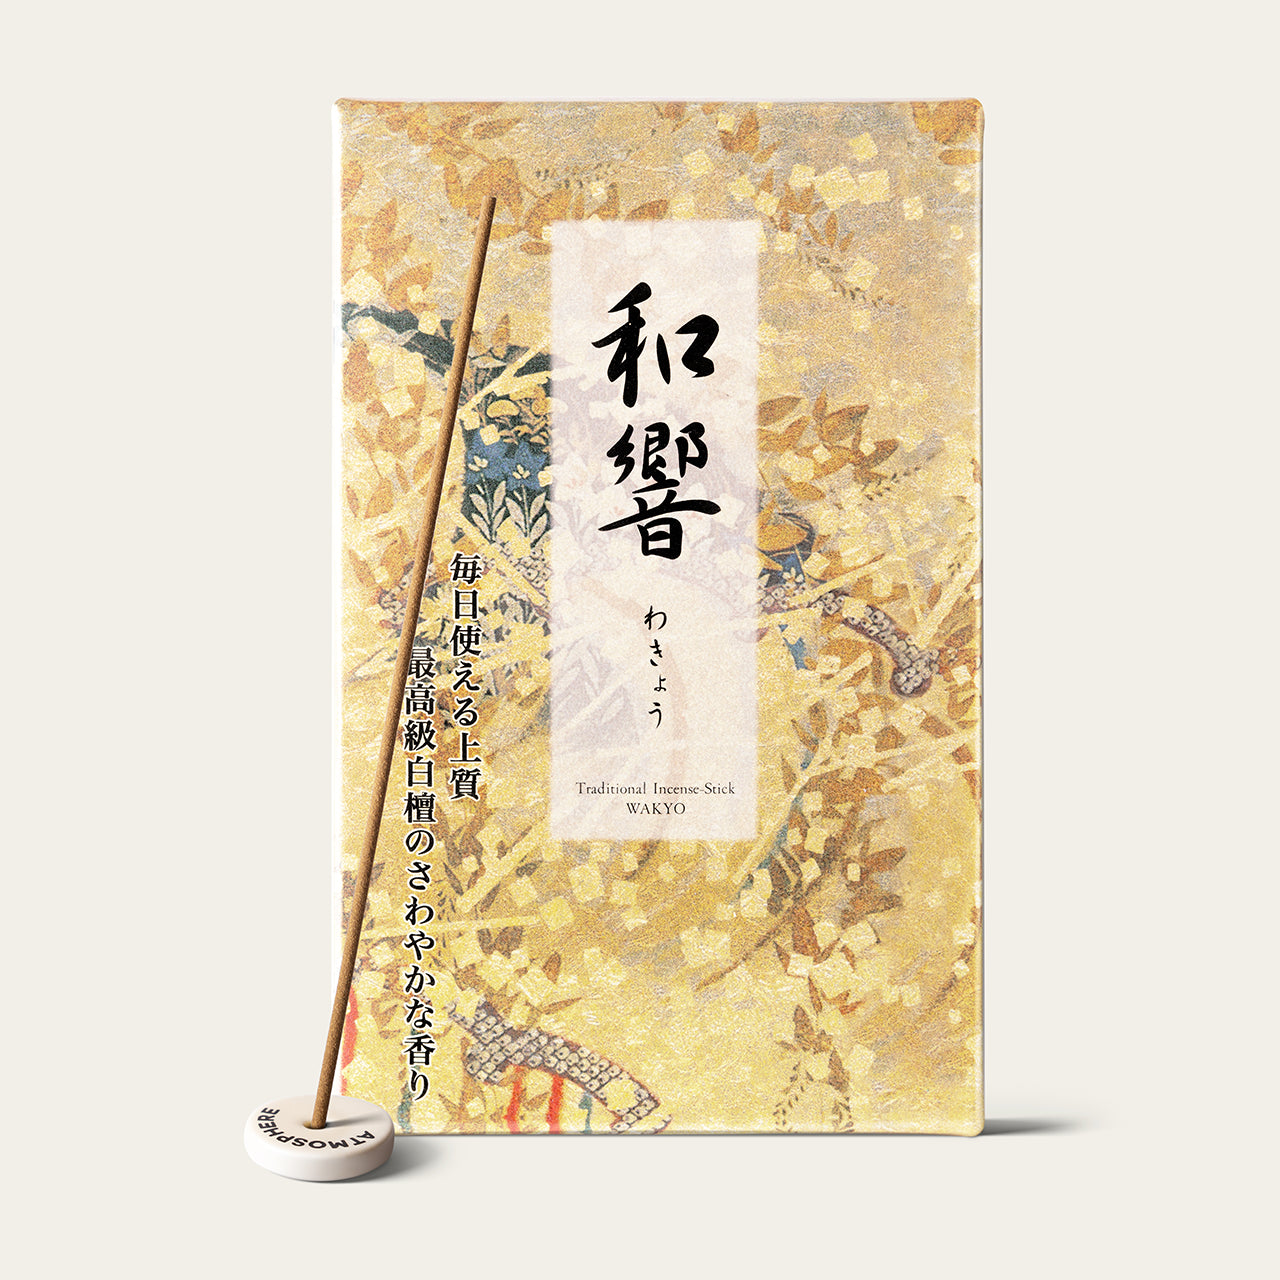 Shorindo Harmony Wakyo Japanese incense sticks (500 sticks) with Atmosphere ceramic incense holder